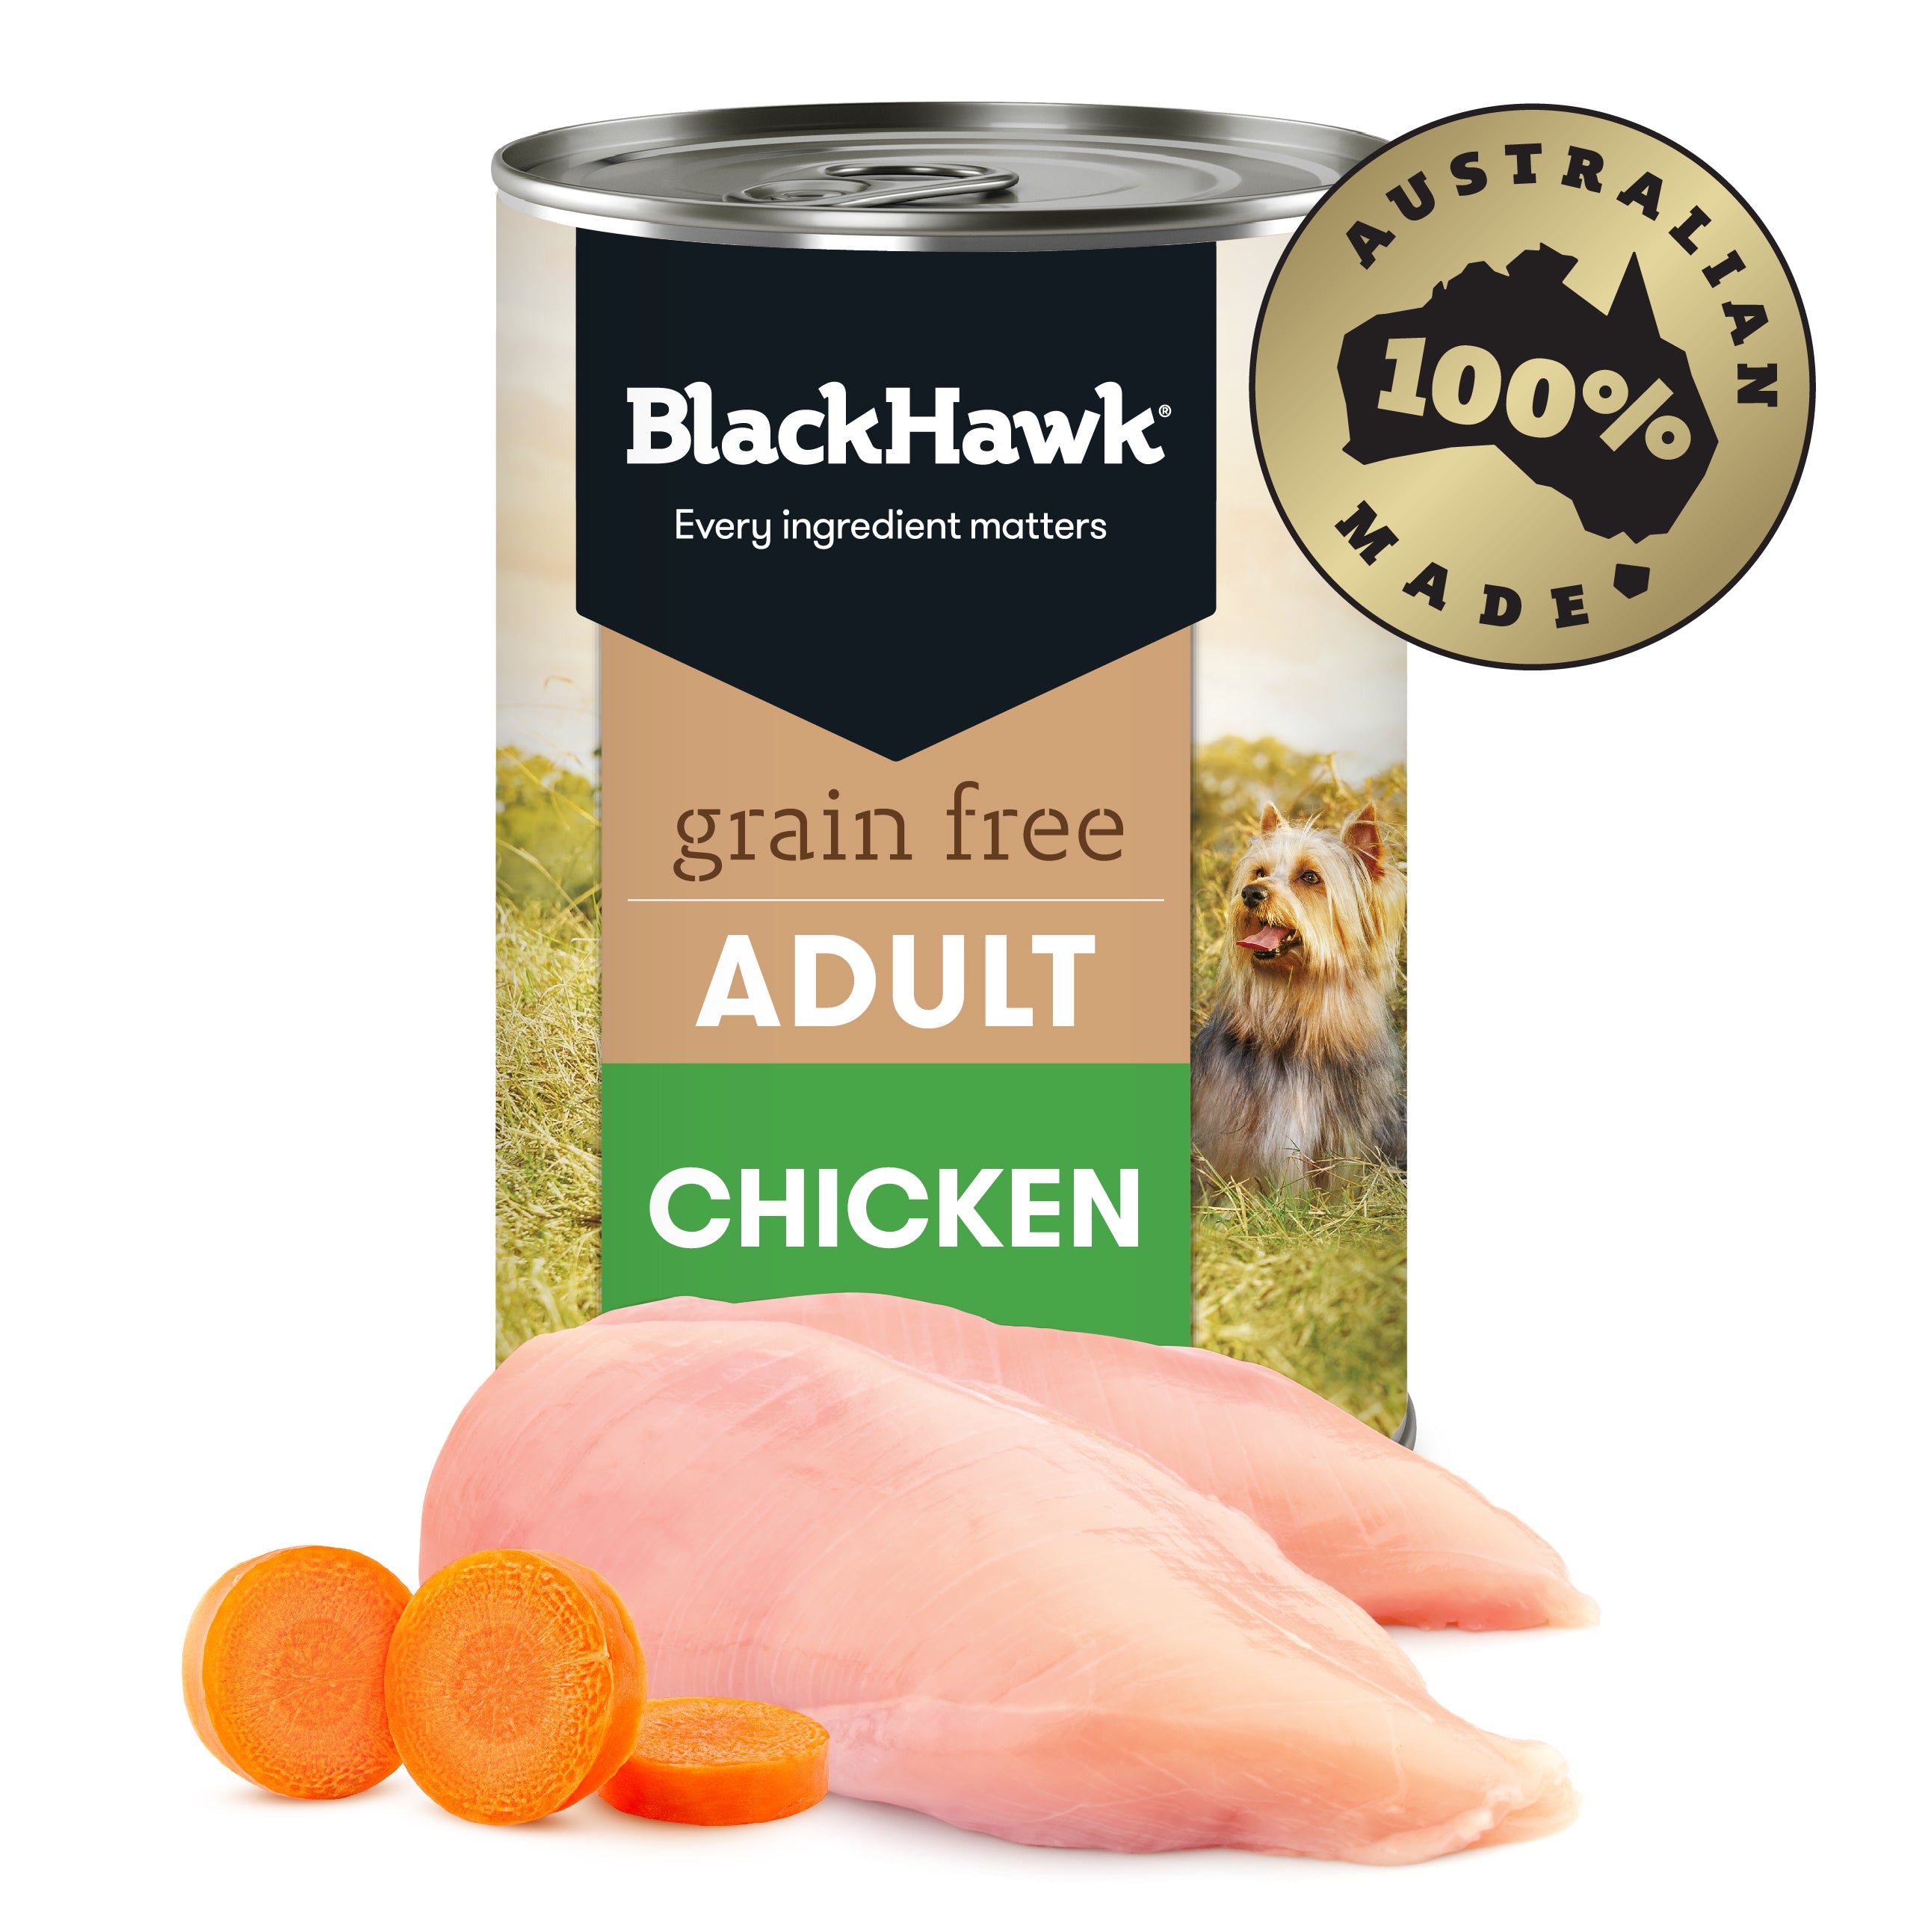 Black Hawk Grain Free Chicken Can 400g